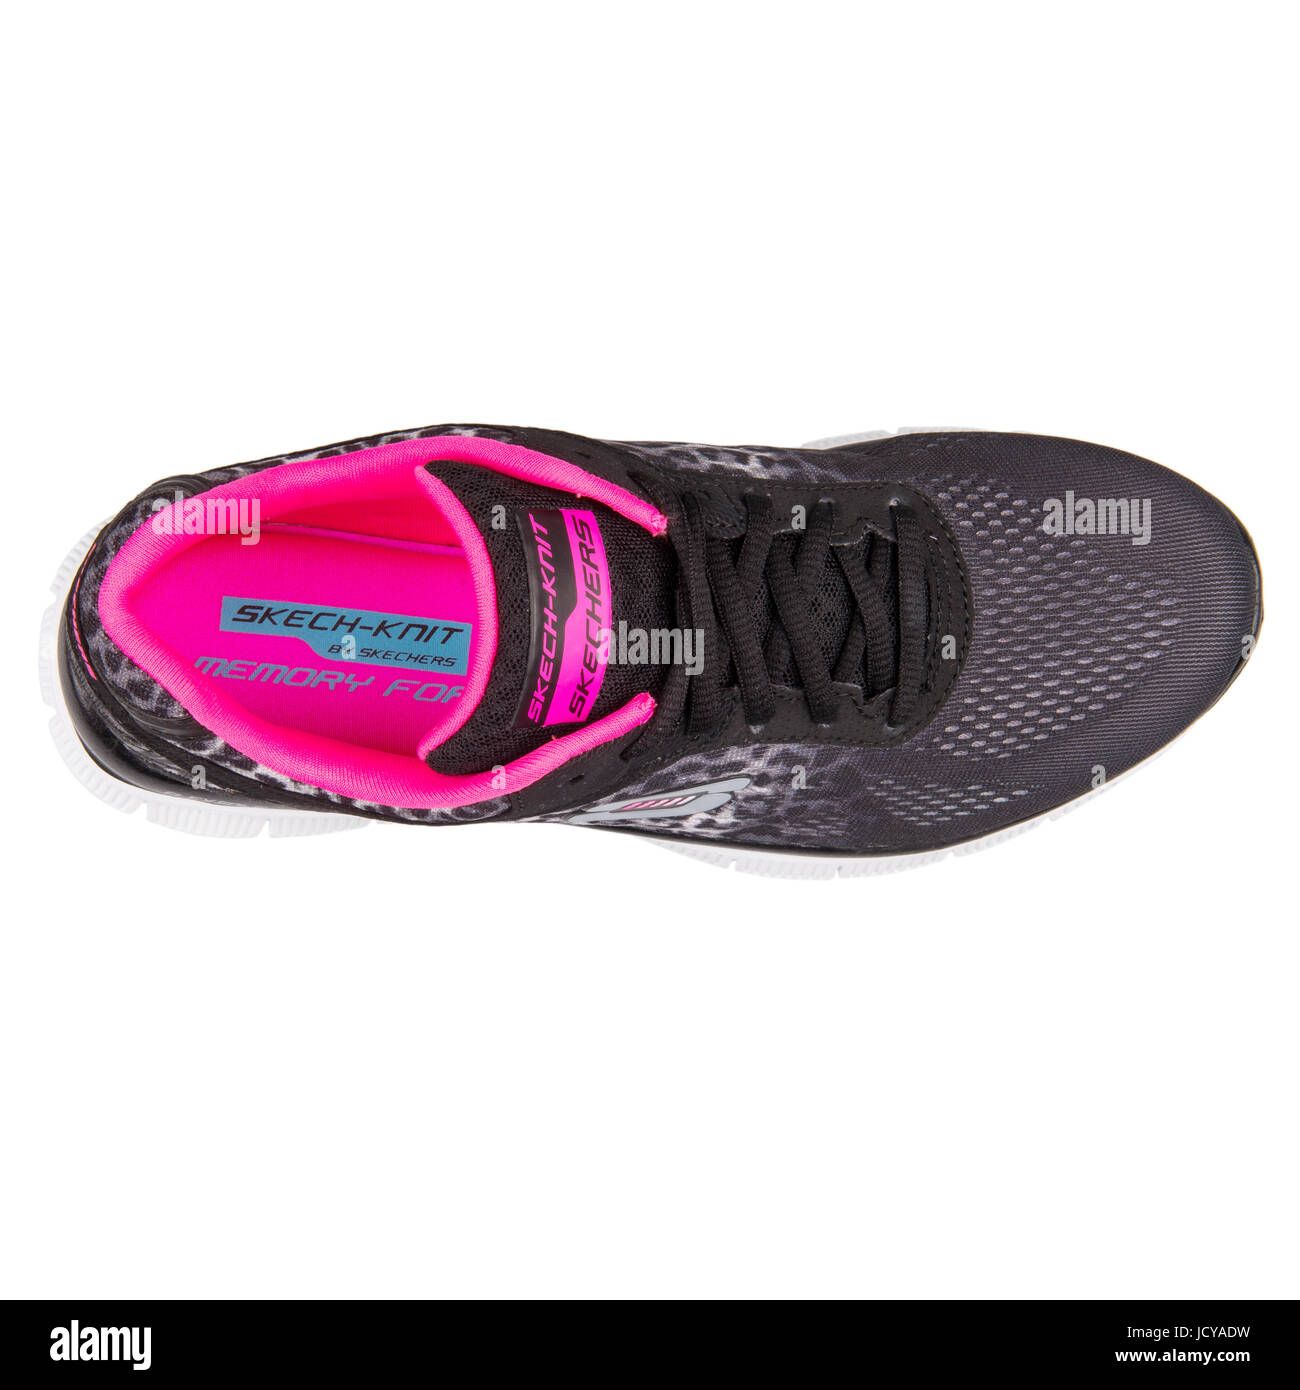 Skechers Flex Appeal-Serengeti Black and Grey Women's Running Shoes -  11878-BKGY Stock Photo - Alamy